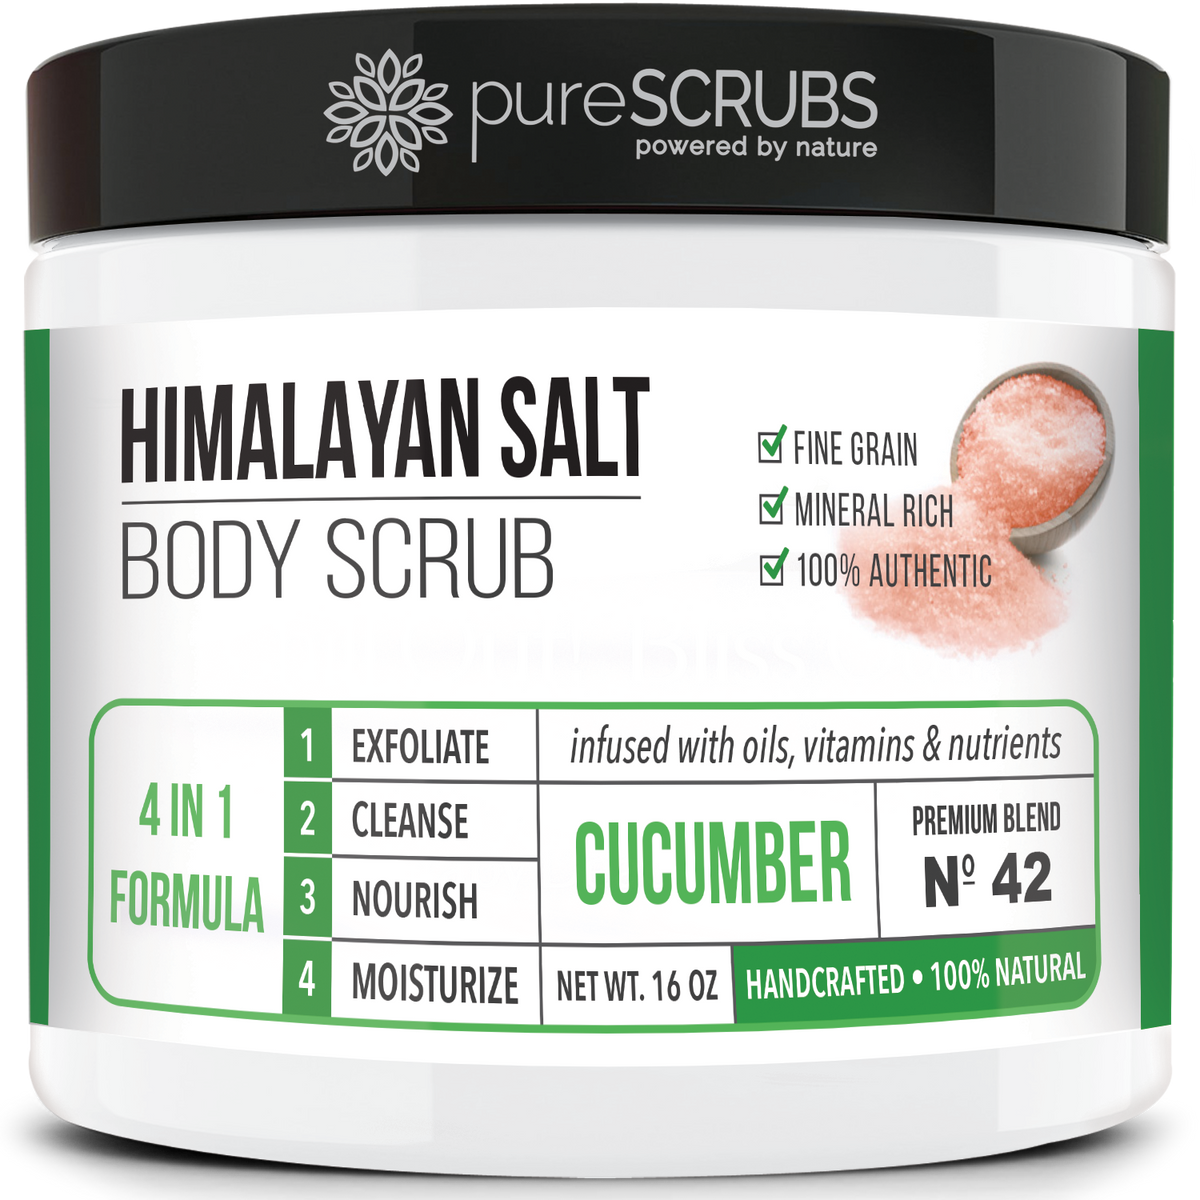 Cucumber Body Scrub / Pink Himalayan Salt / Premium Blend #42